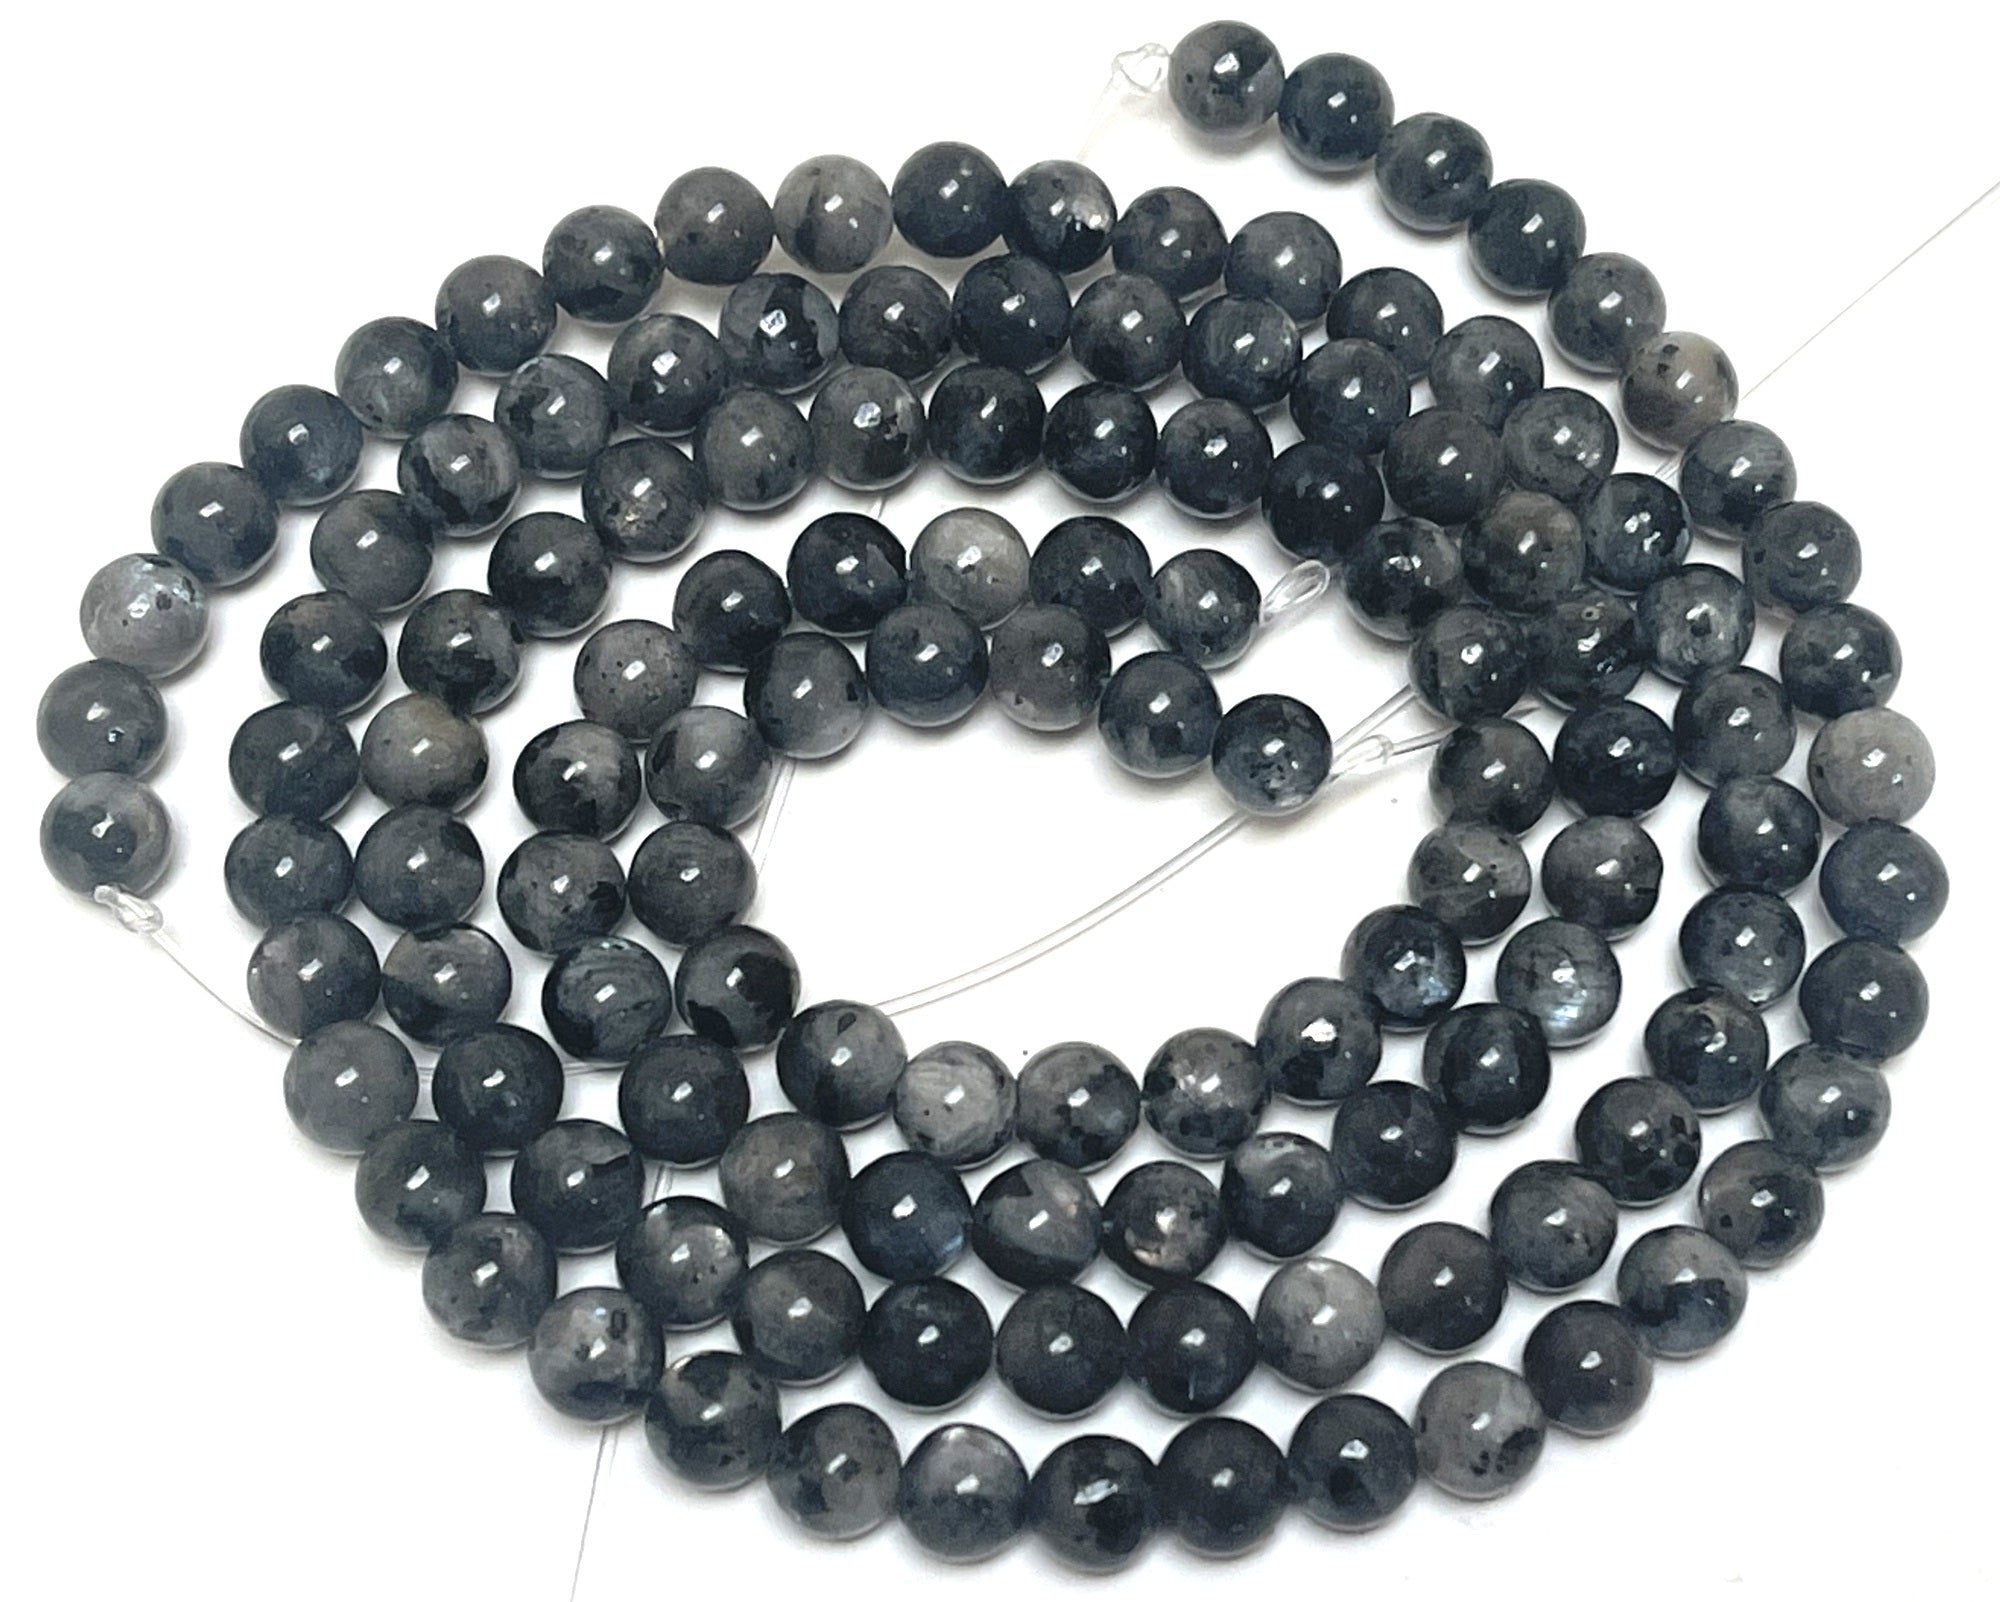 Black Labradorite Larvikite 6mm round natural gemstone beads 15" strand